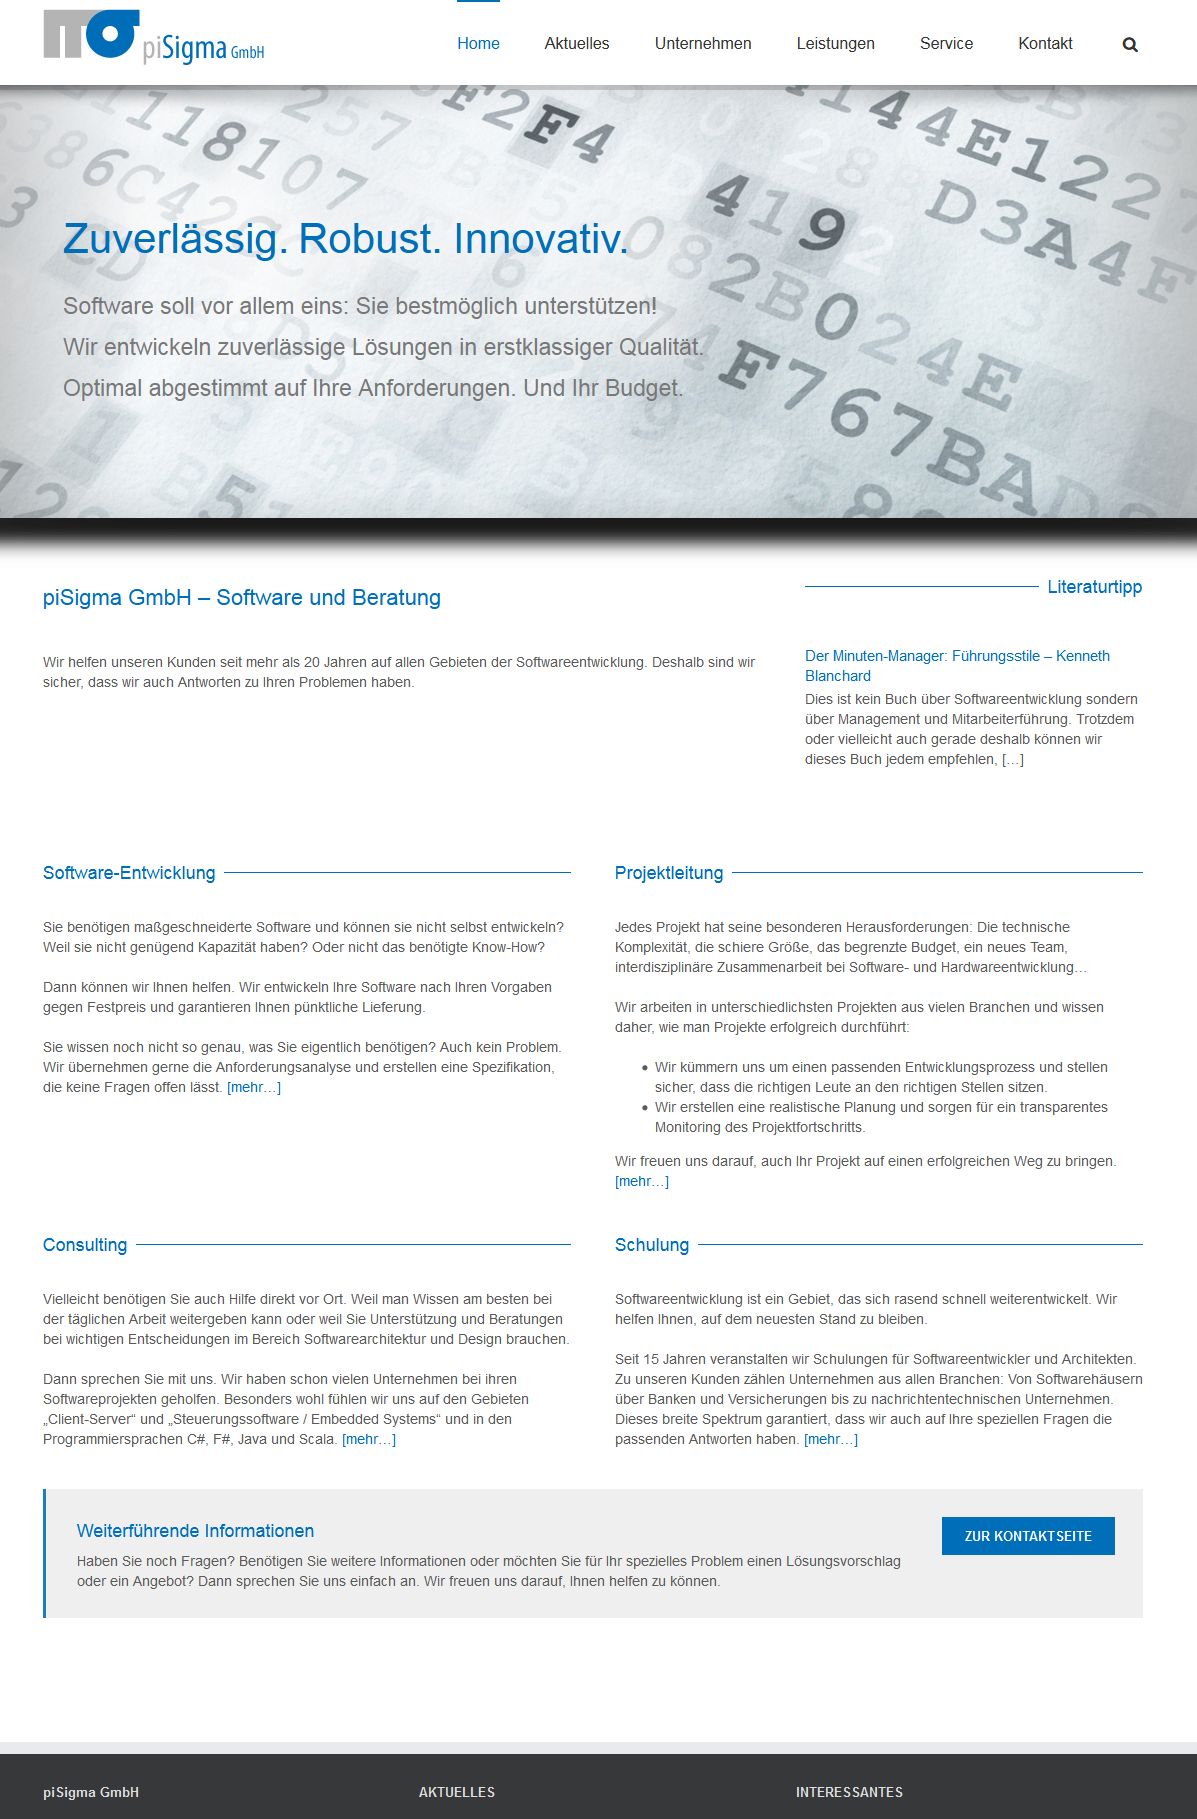 piSigma GmbH - Software und Beratung, Backnang